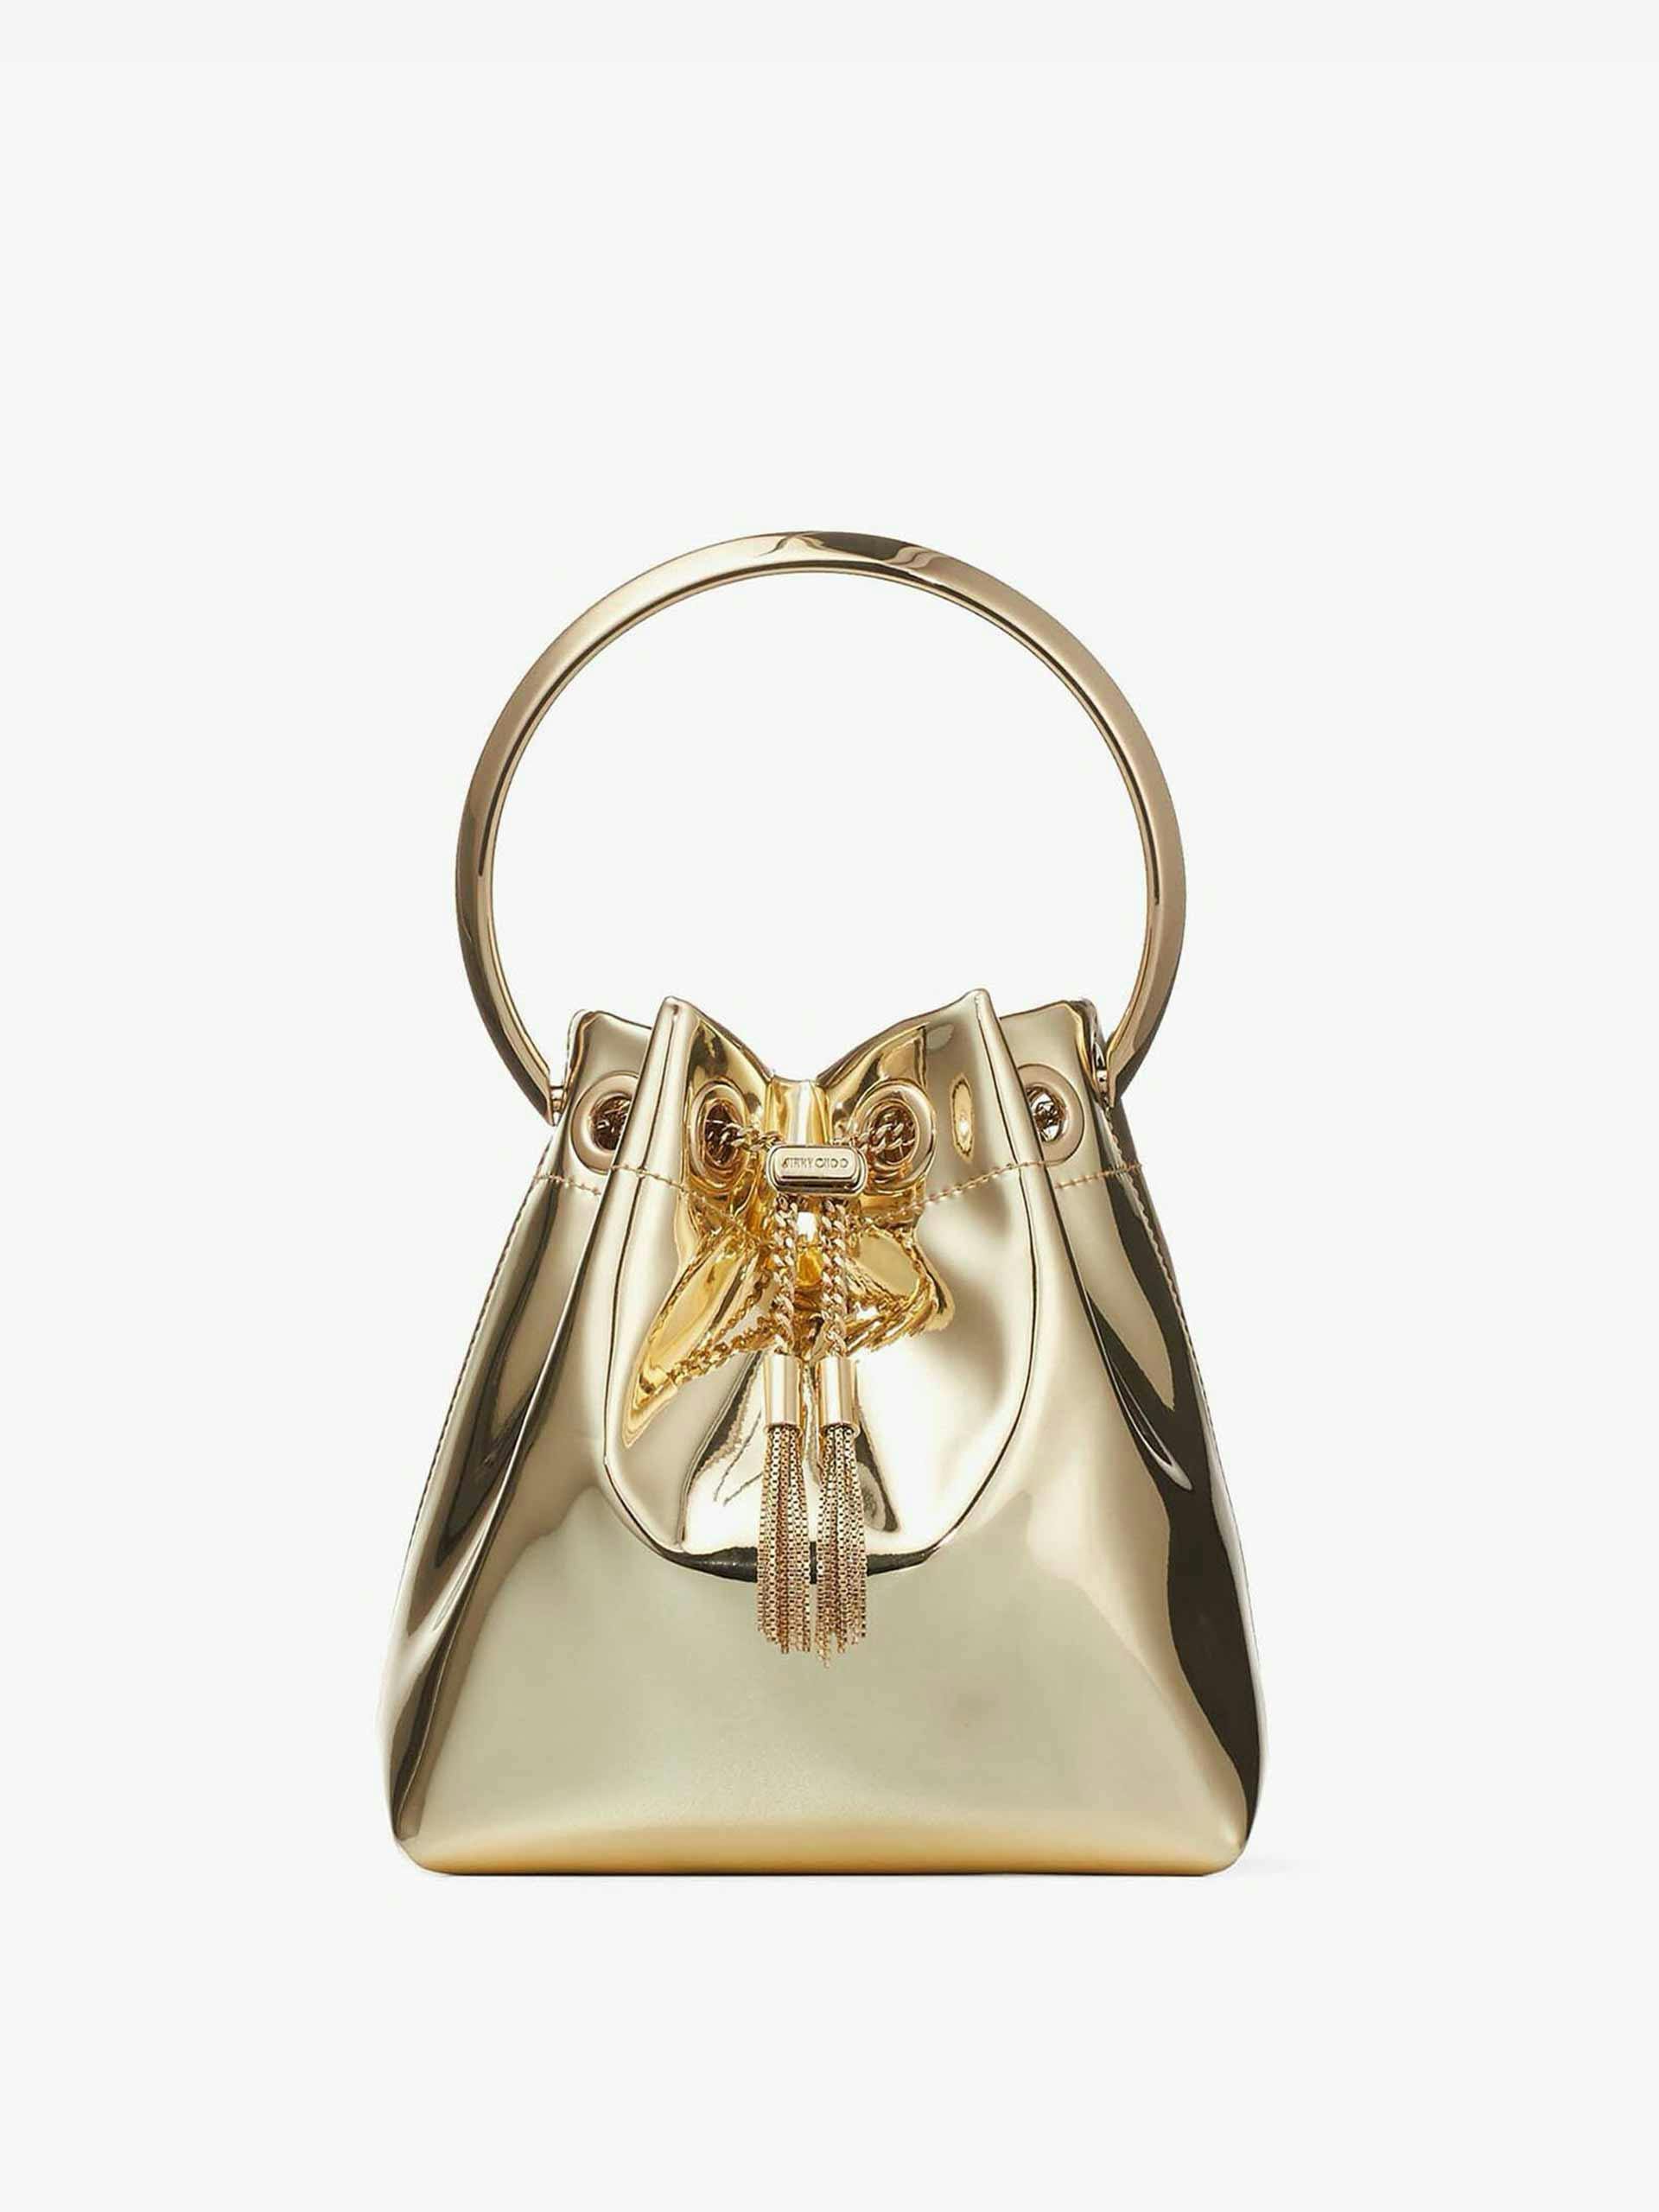 Gold mini bag with metal handle